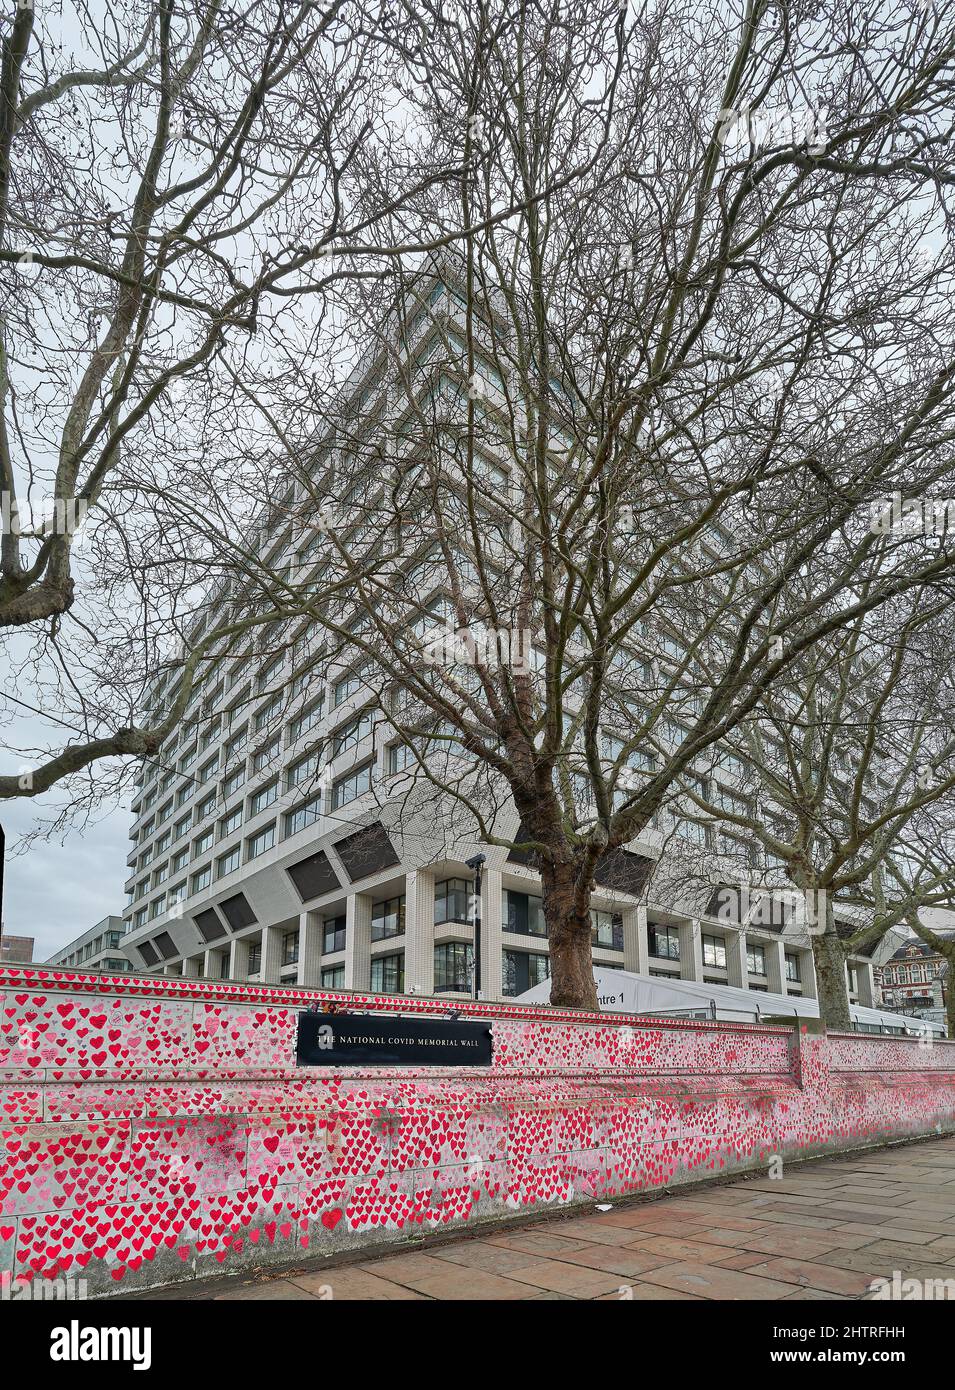 Die National Covid Gedenkmauer vor dem St. Thomas' NHS Hospital, am Ufer der Themse, London, England. Stockfoto